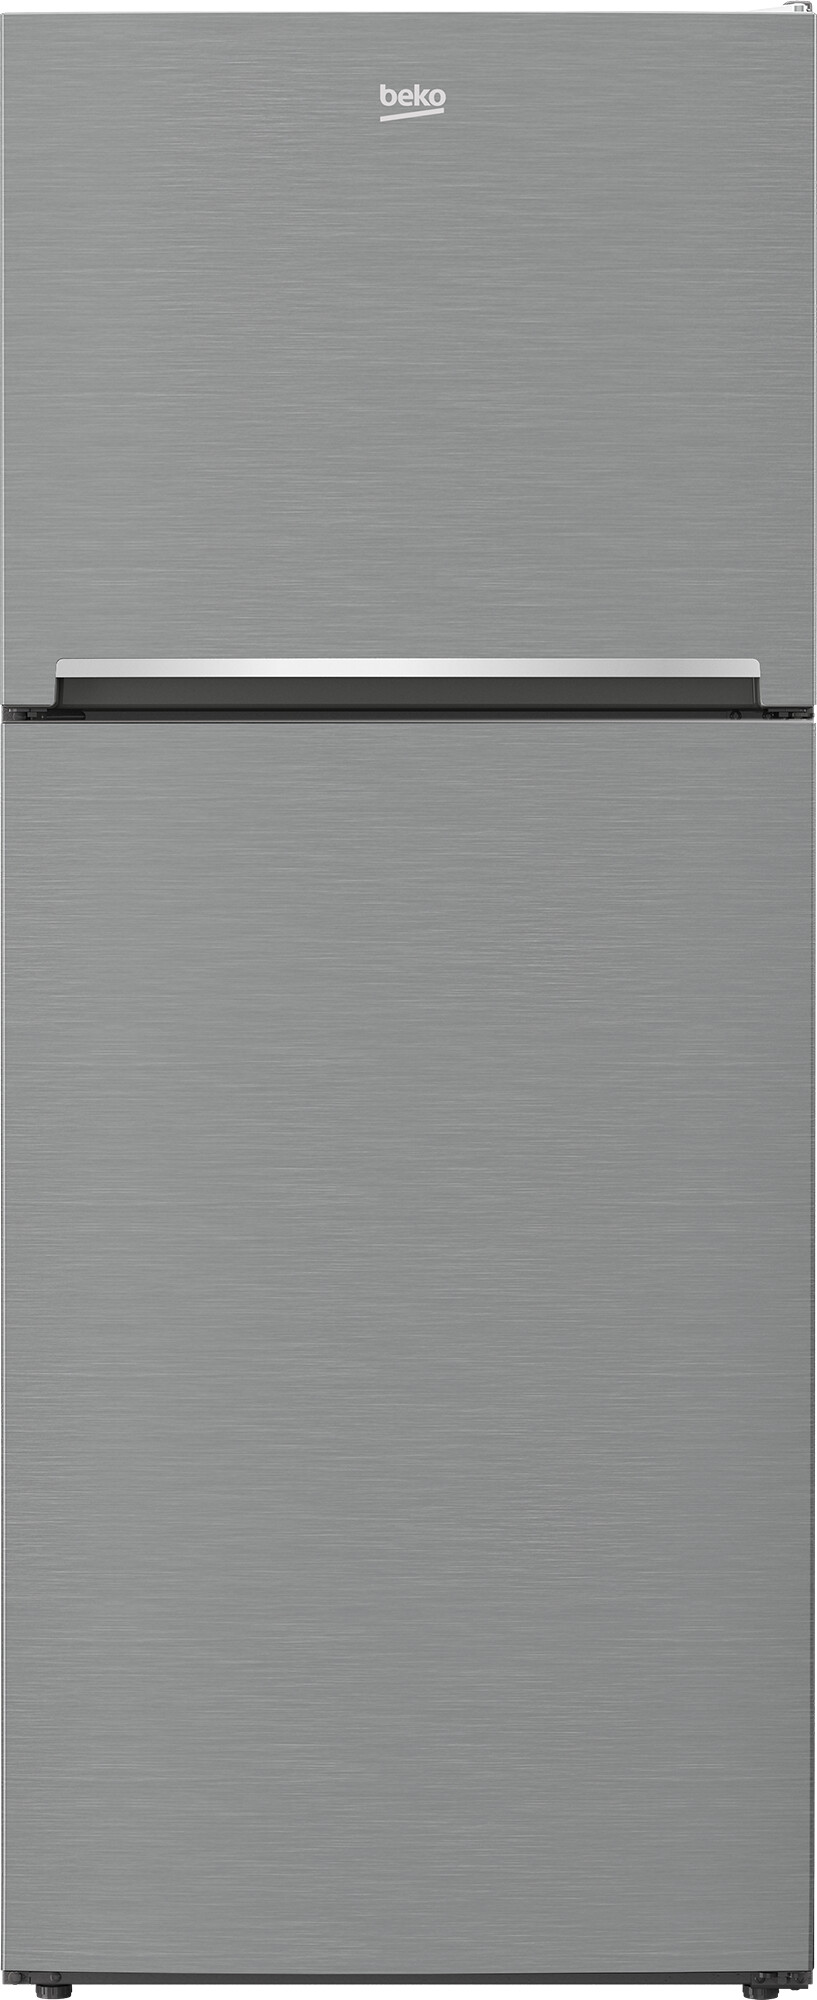 Beko 28 Inch 28 Counter Depth Top Freezer Refrigerator BFTF2716SSIME